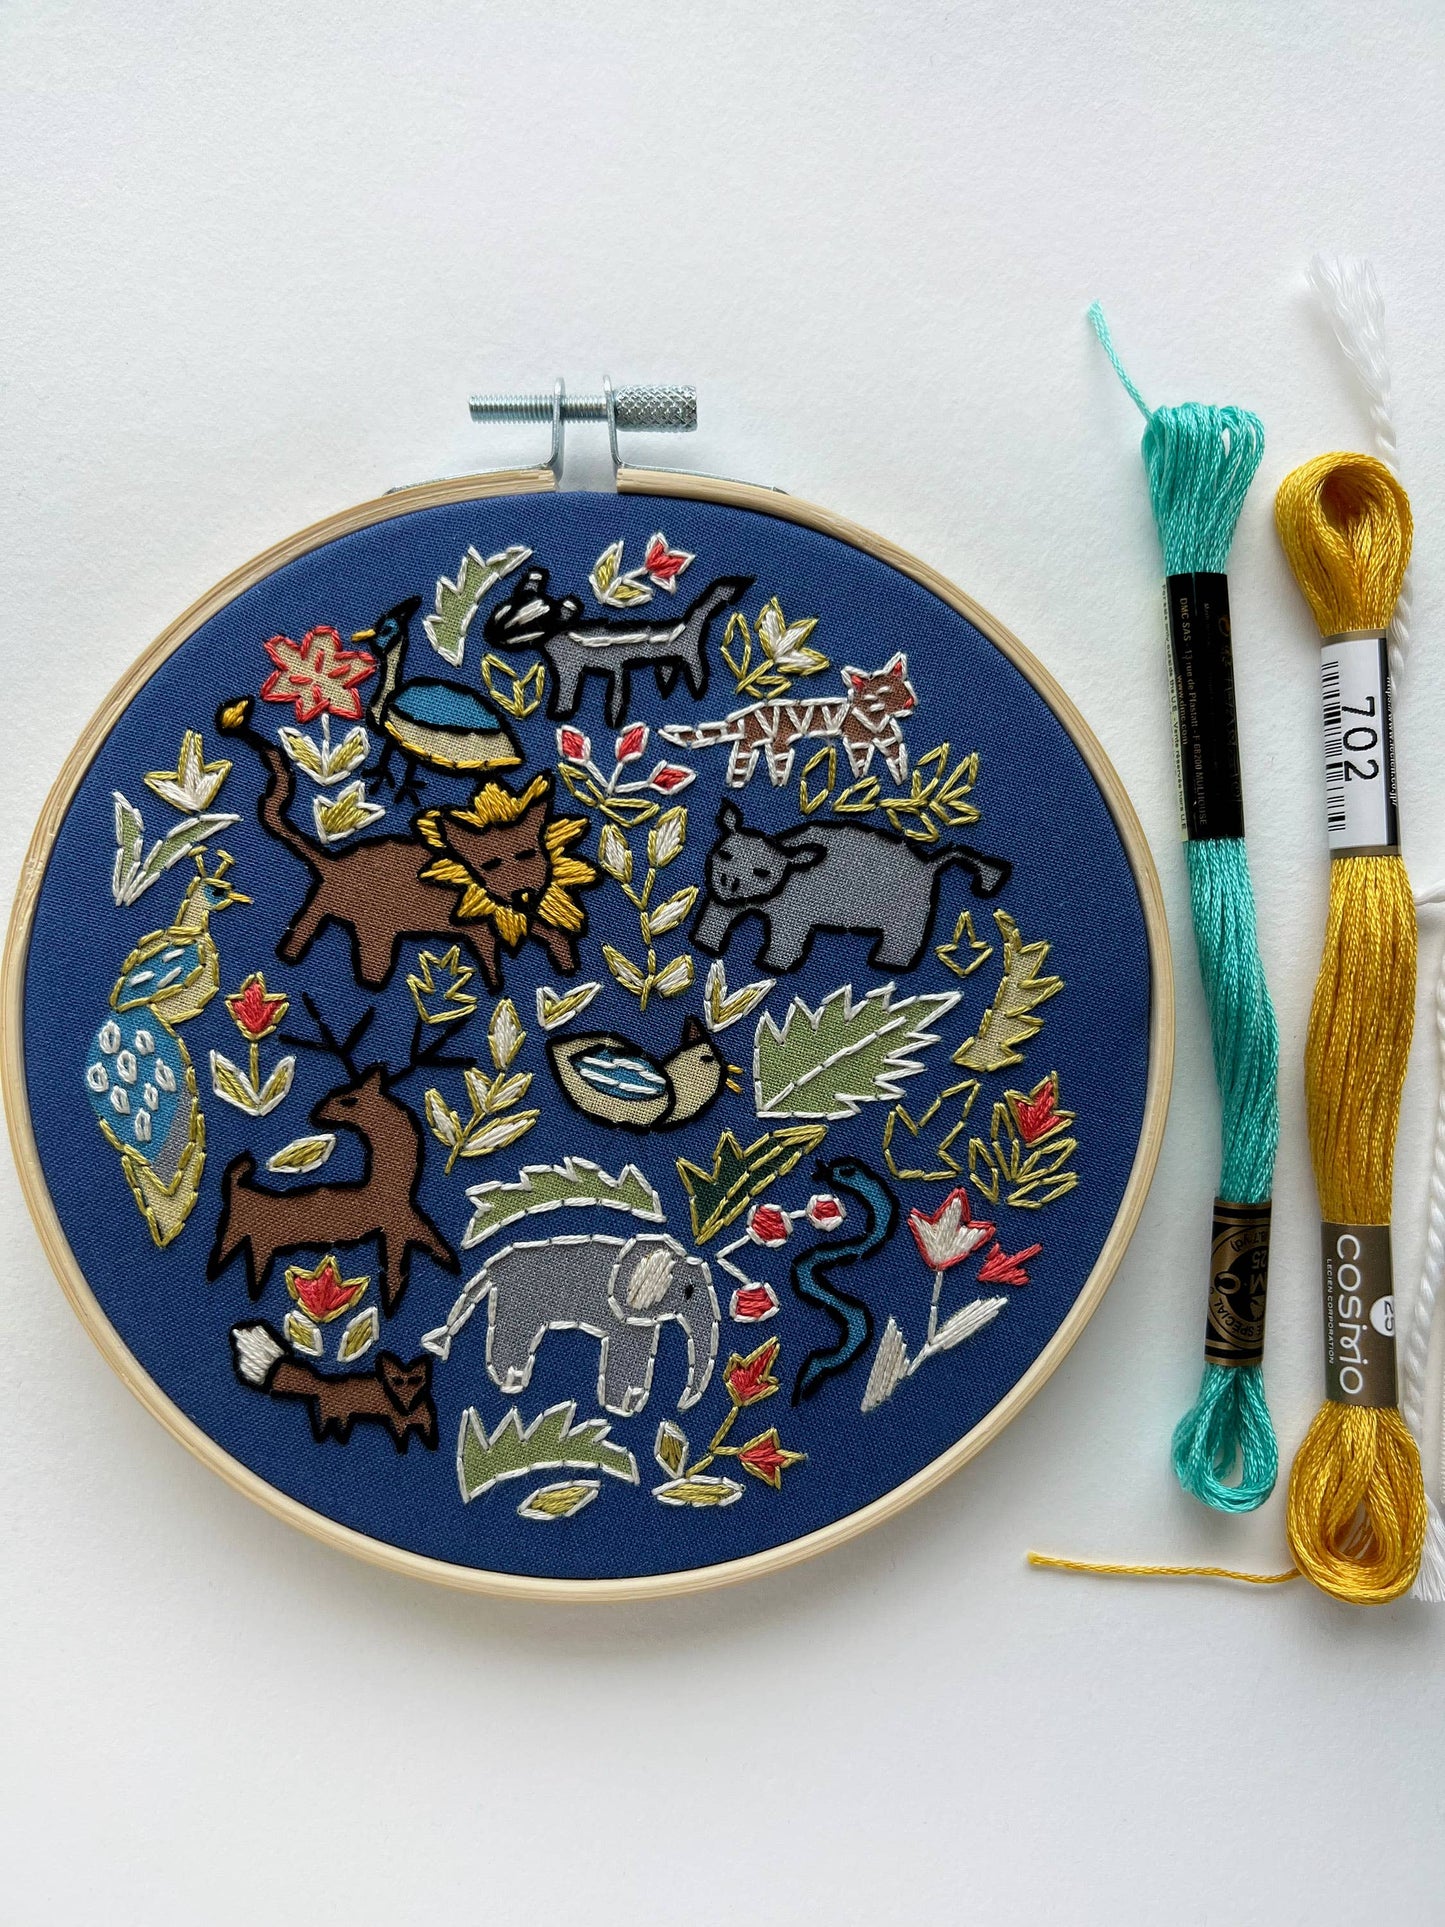 Wildlife Embroidery Kit by Rikrack